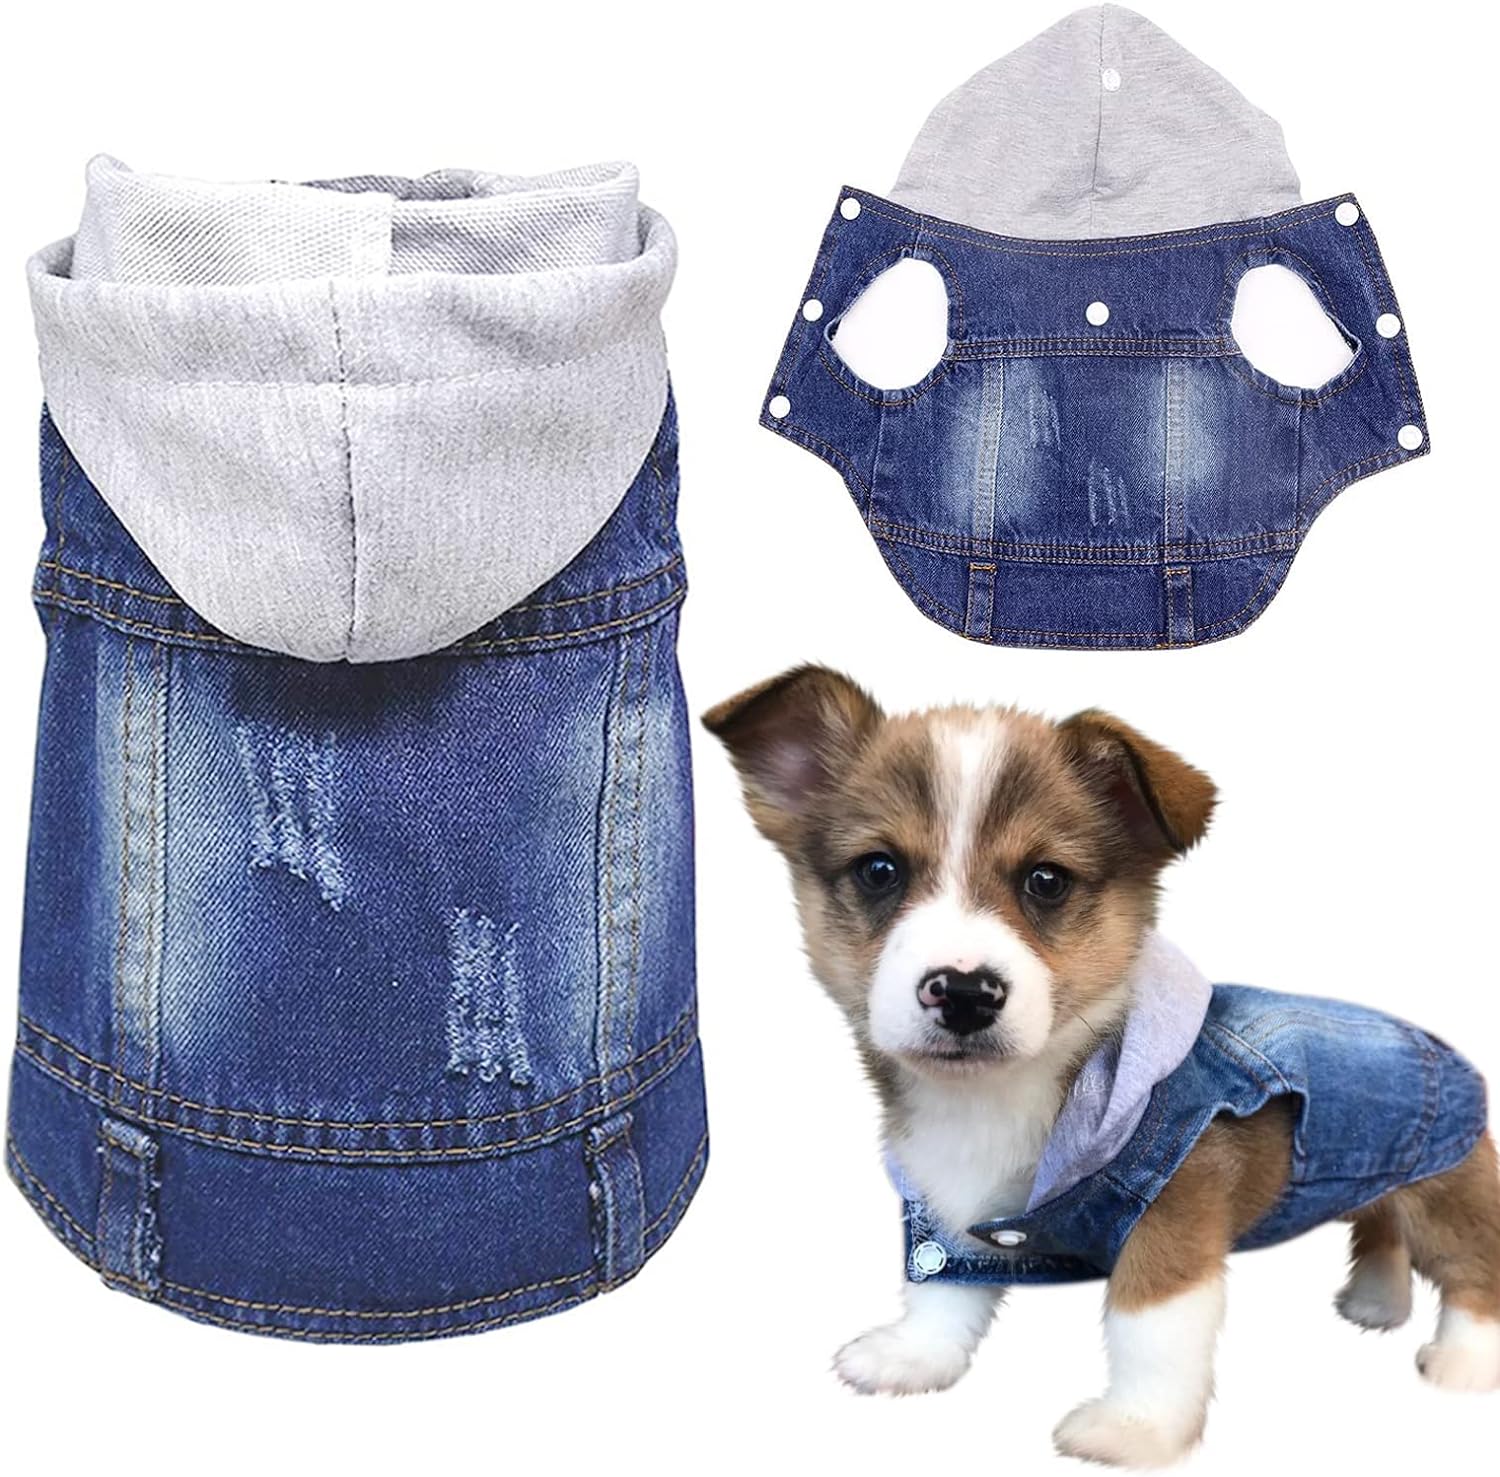 SILD Pet Clothes Dog Jeans Jacket Cool Blue Denim Coat Small Medium Dogs Lapel Vests Classic Hoodies Puppy Blue Vintage Washed Clothes (Grey,M)